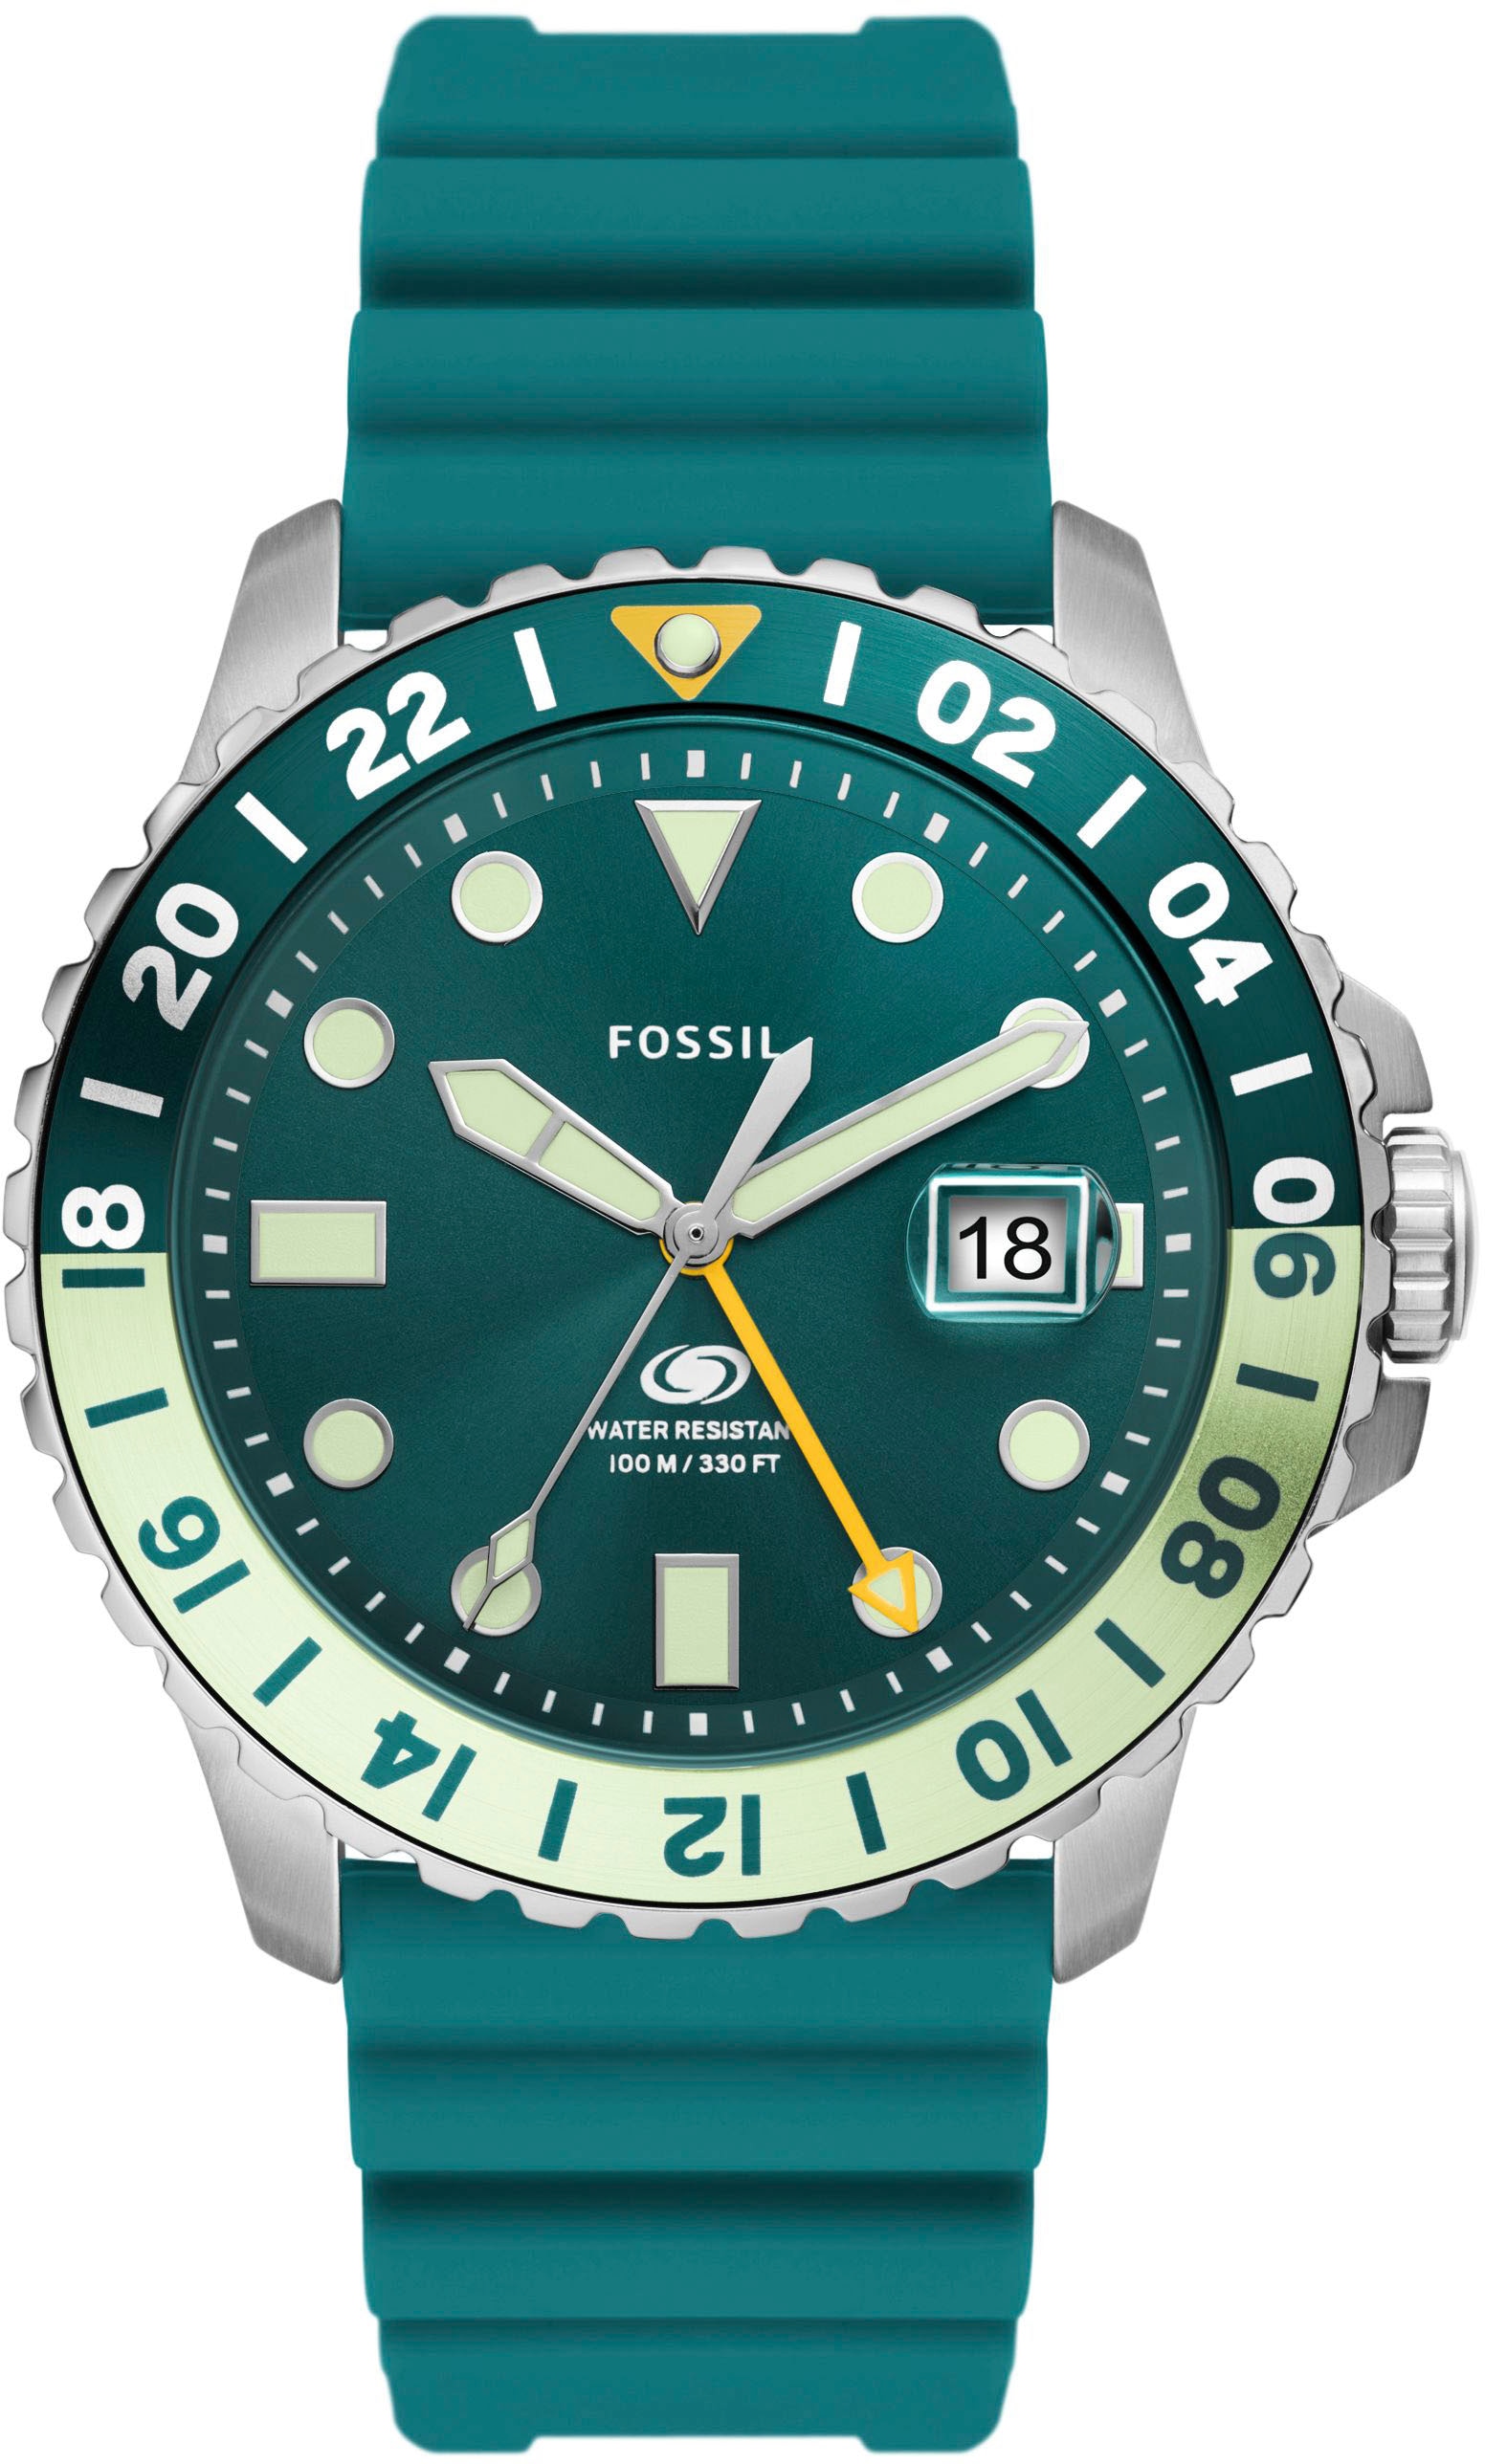 Fossil Quarzuhr »FOSSIL BLUE GMT, FS5992«, Armbanduhr, Damenuhr, Datum, Silikonarmband, bis 10 bar wasserdicht